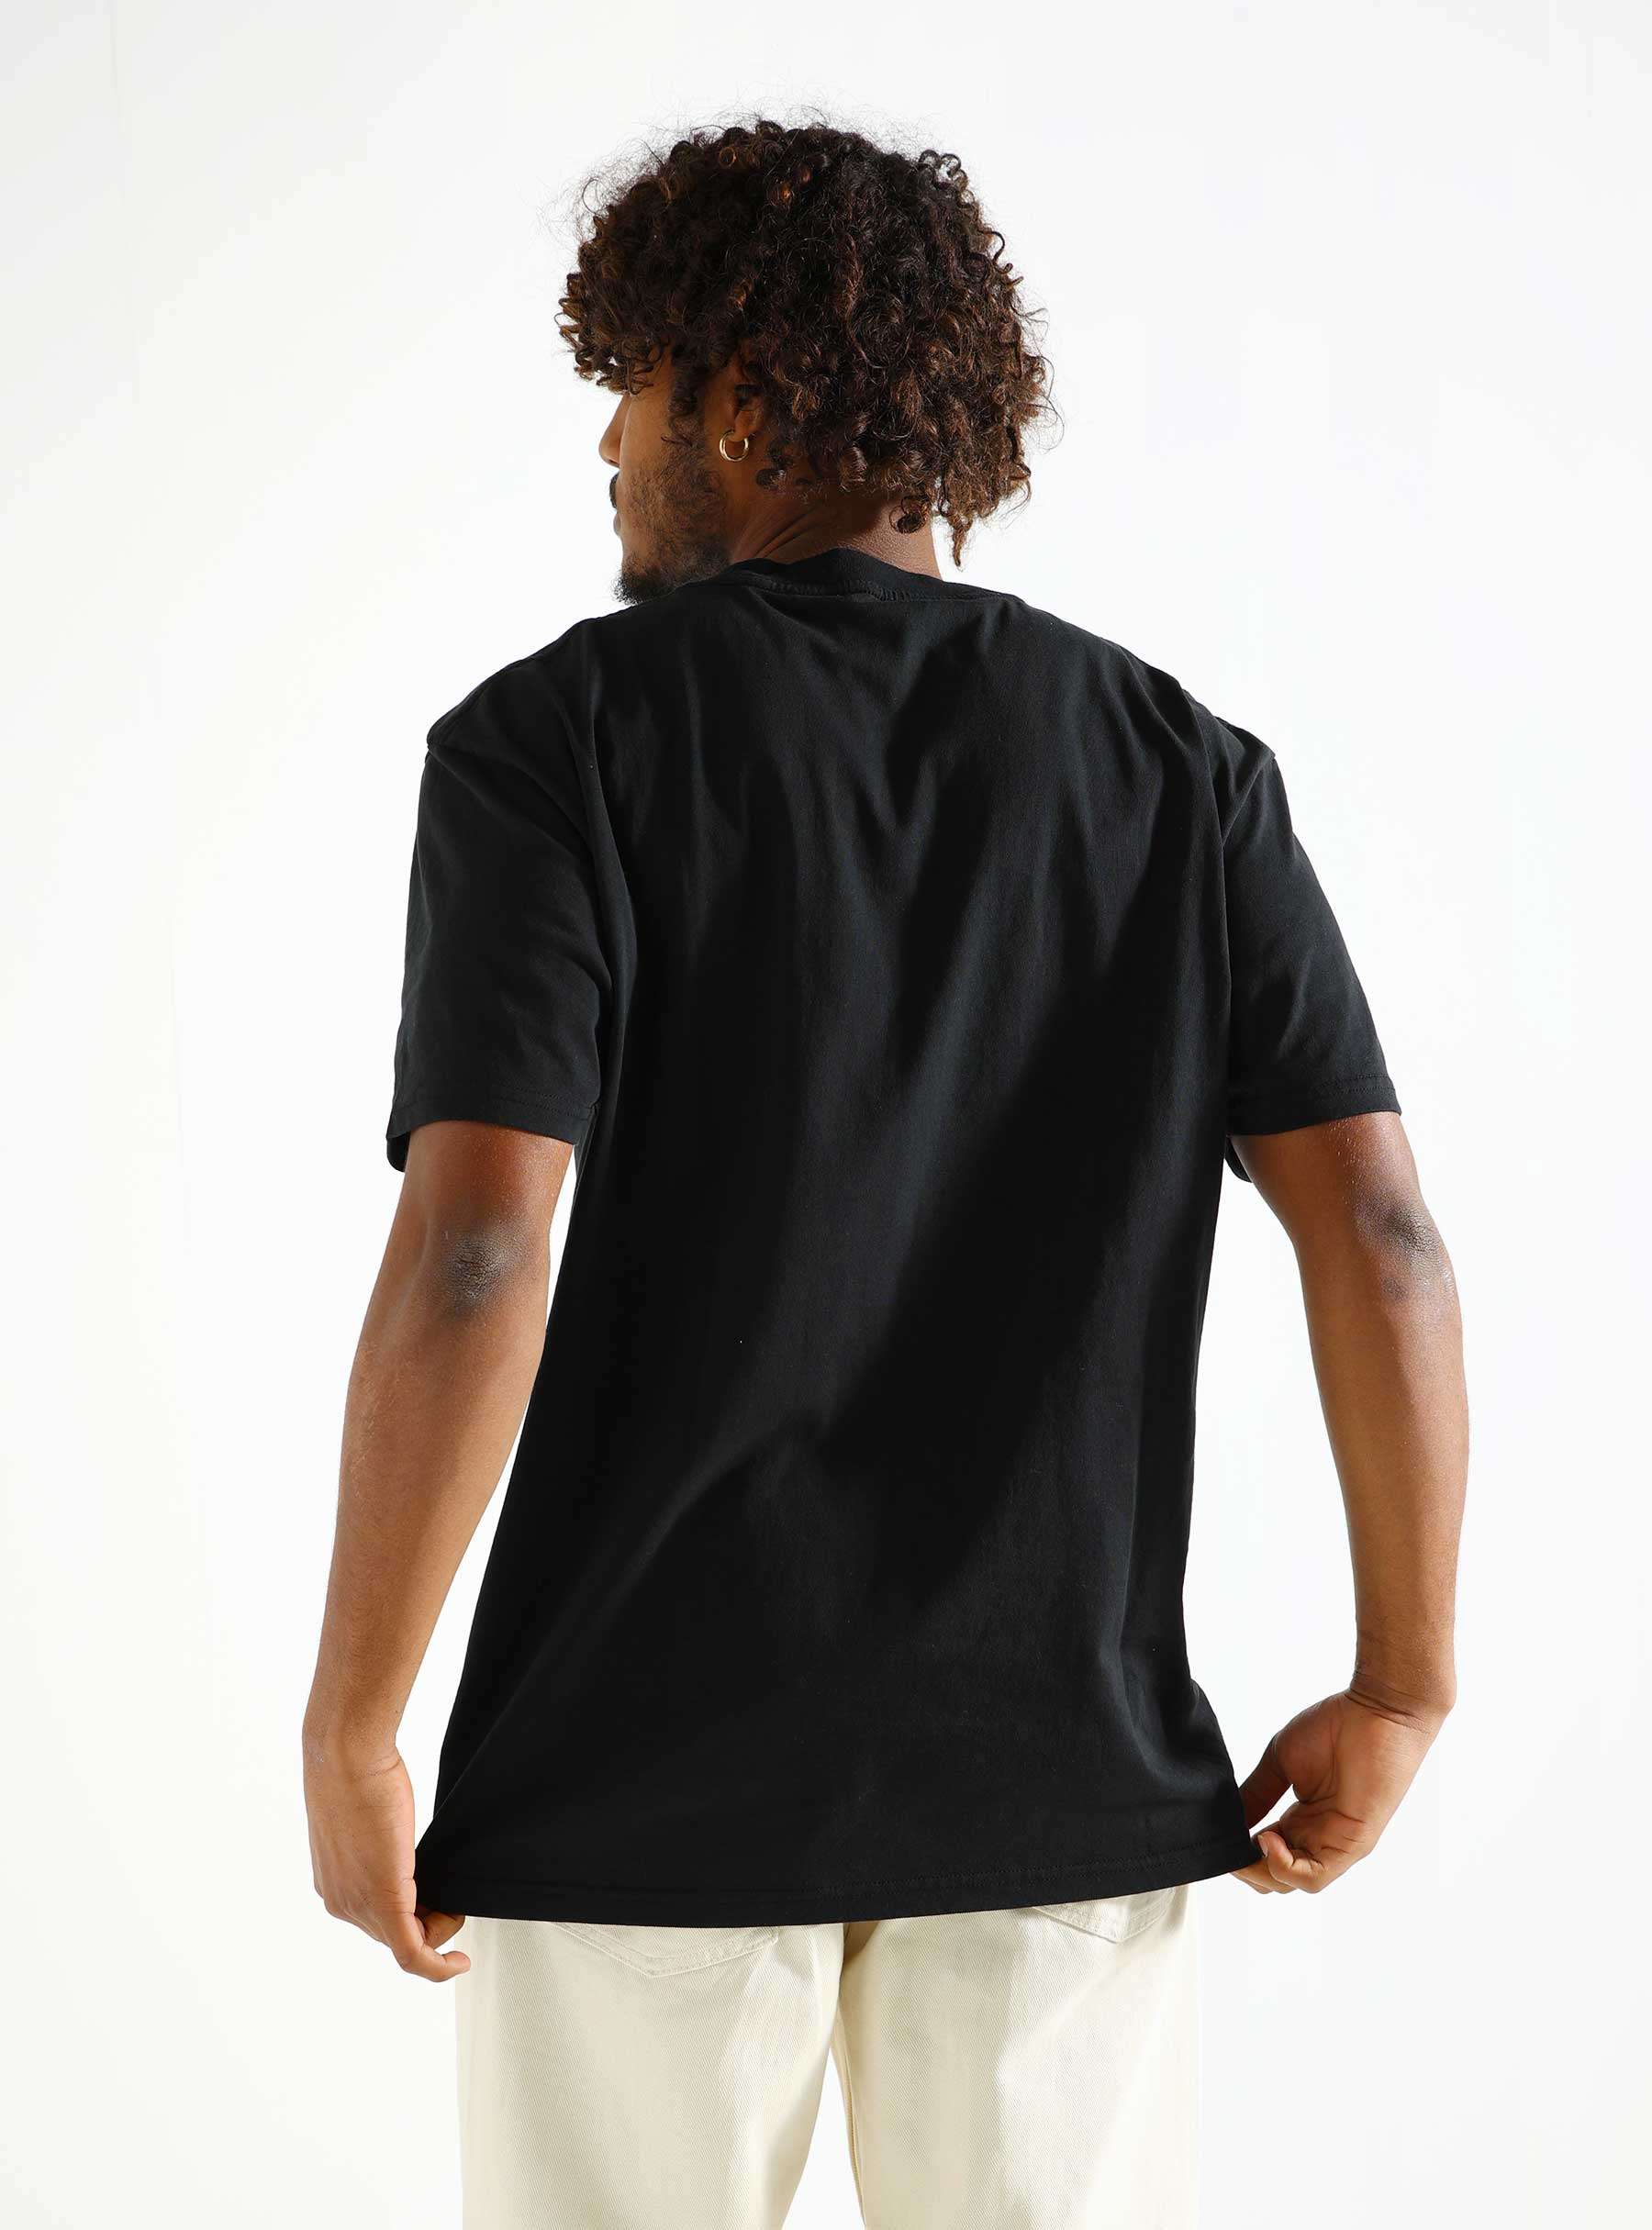 Souvenir T-shirt Black 2401105001